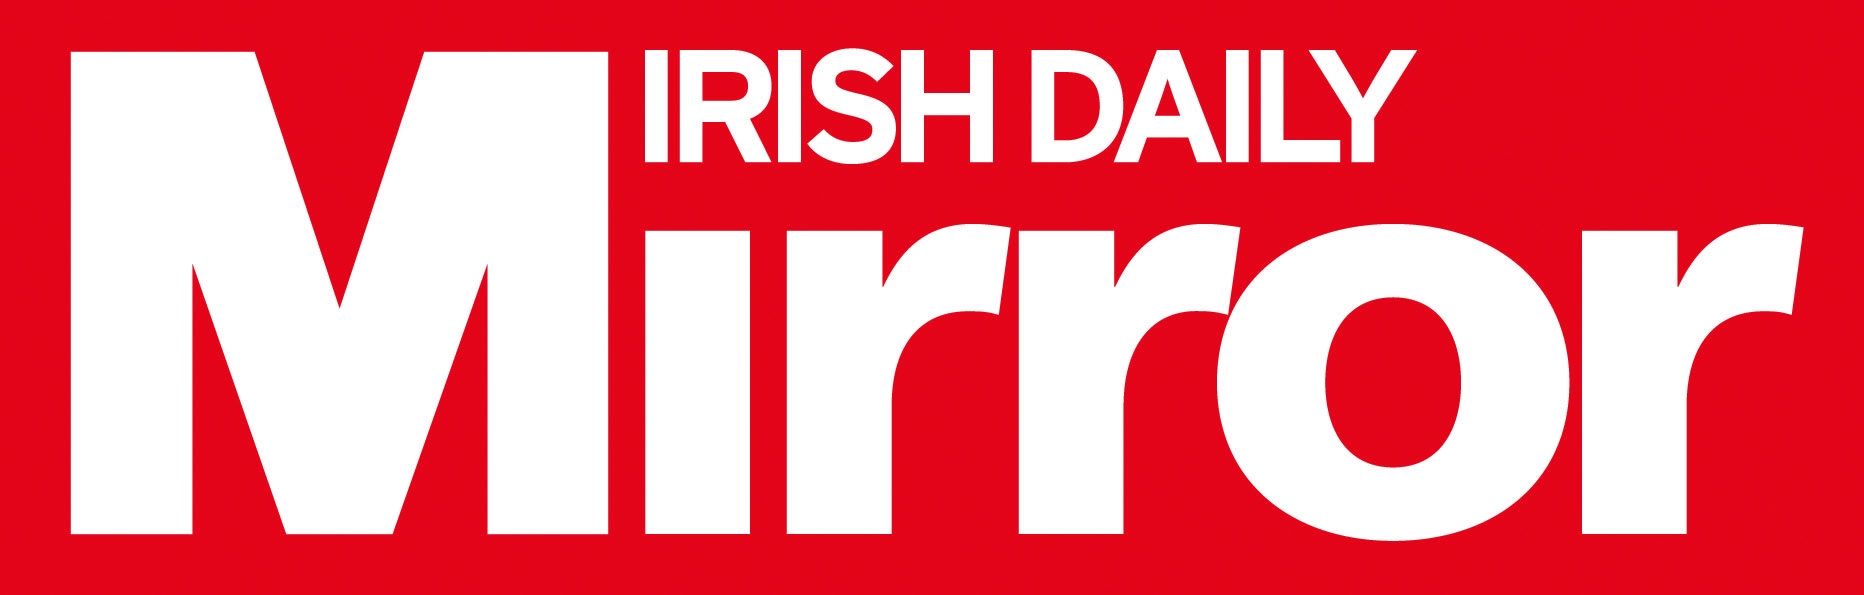 Irish Daily Mirror logo